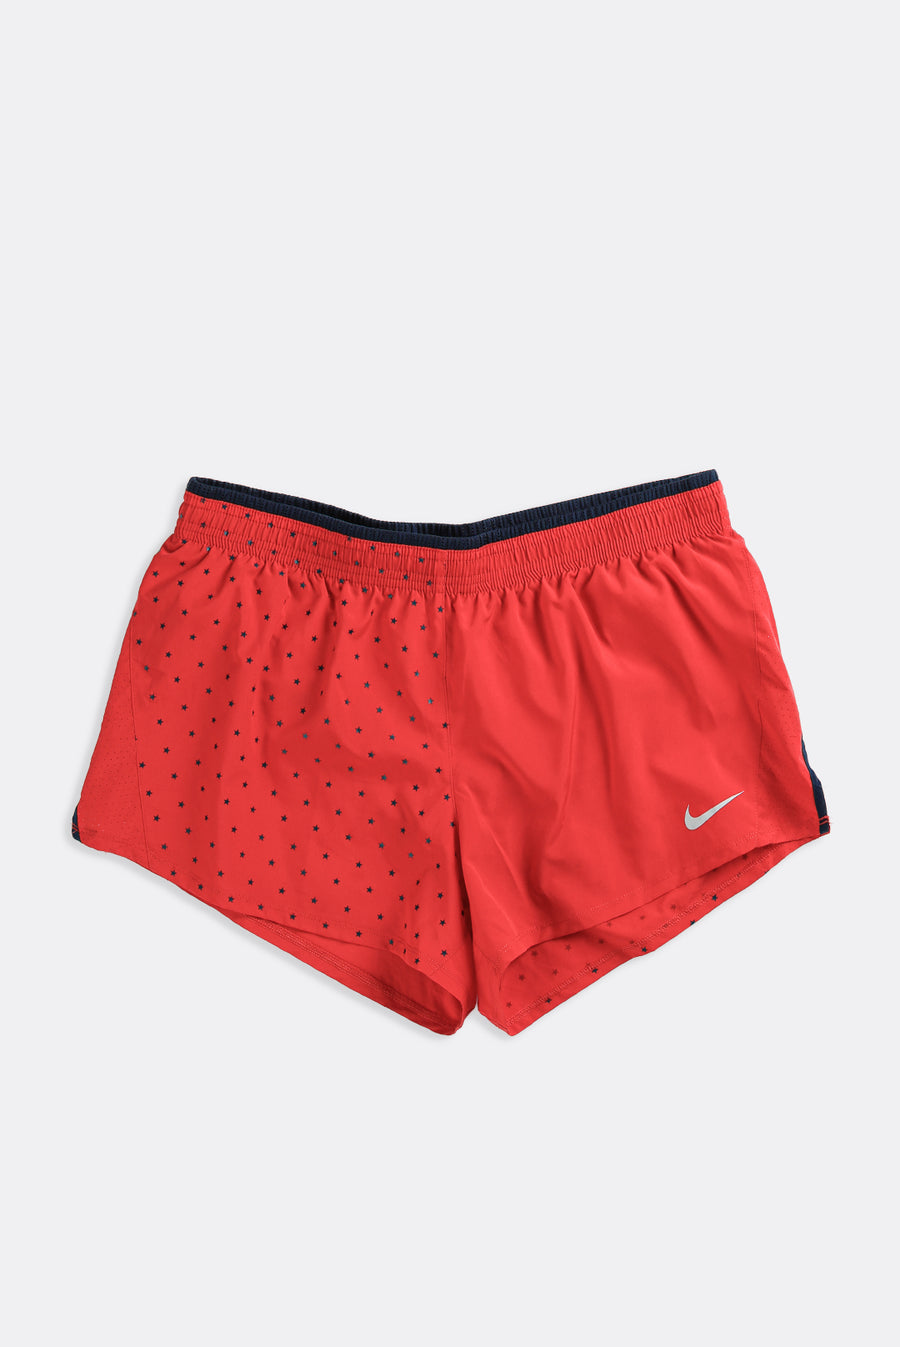 Vintage Nike Shorts - XL